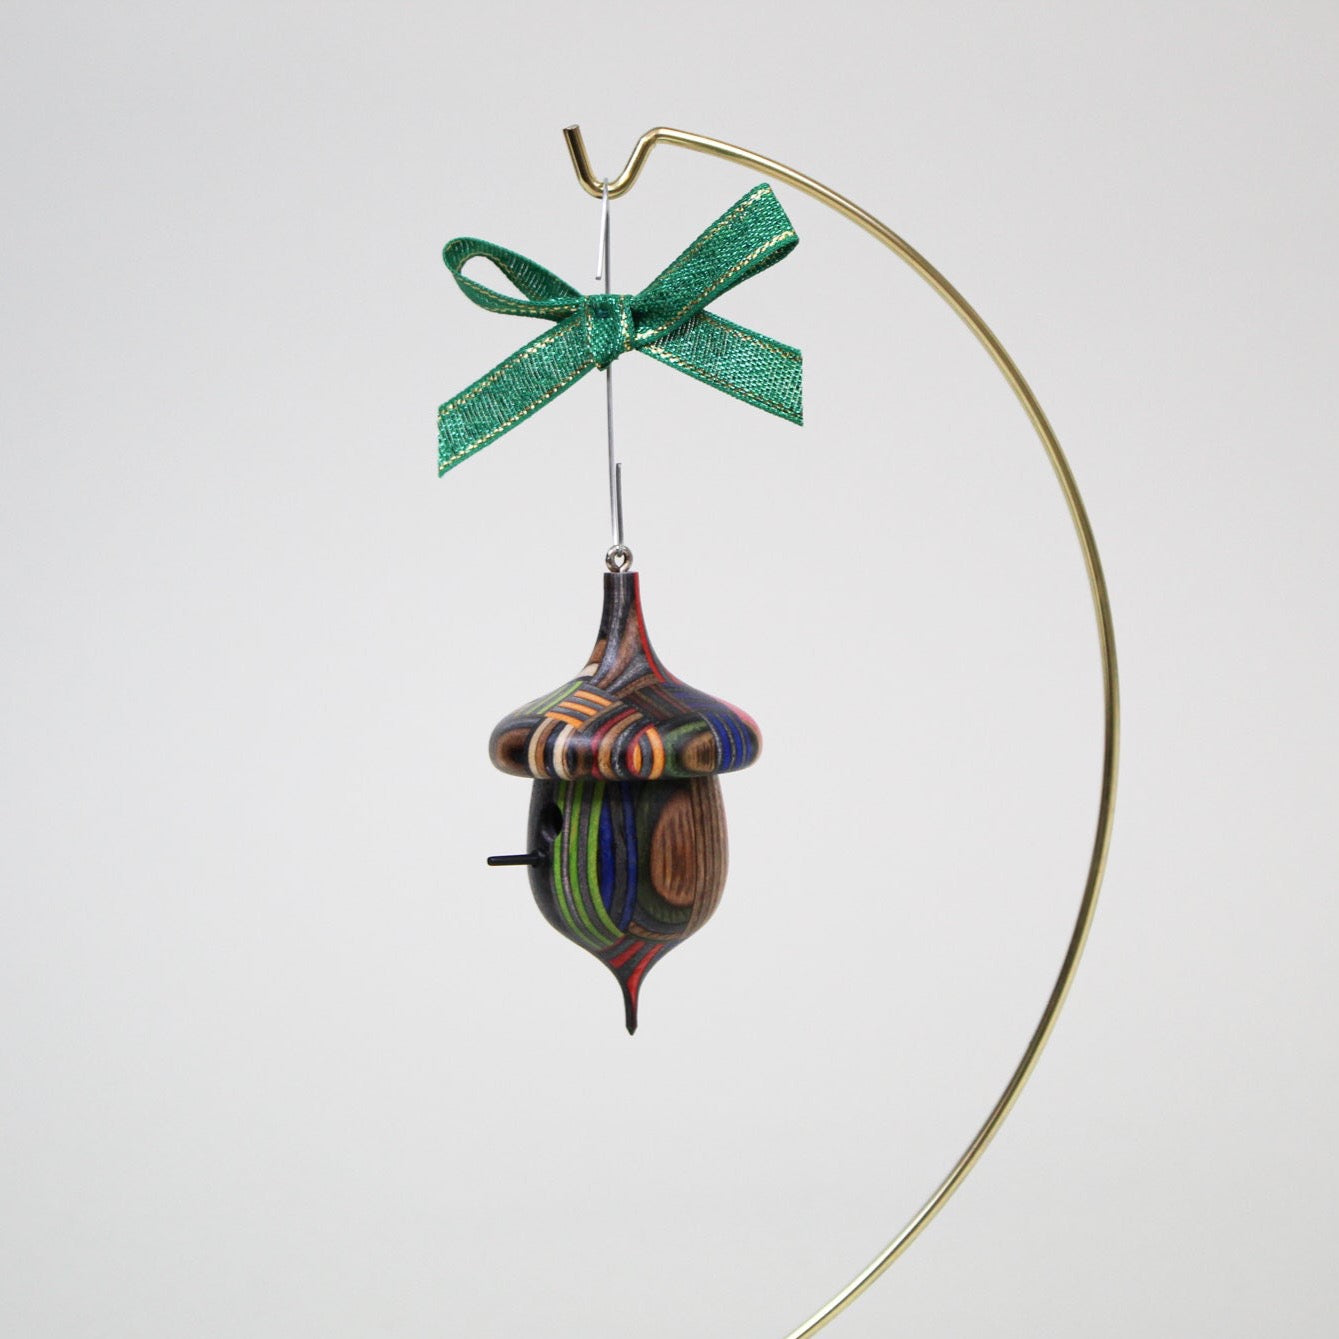 Acorn Birdhouse Ornament